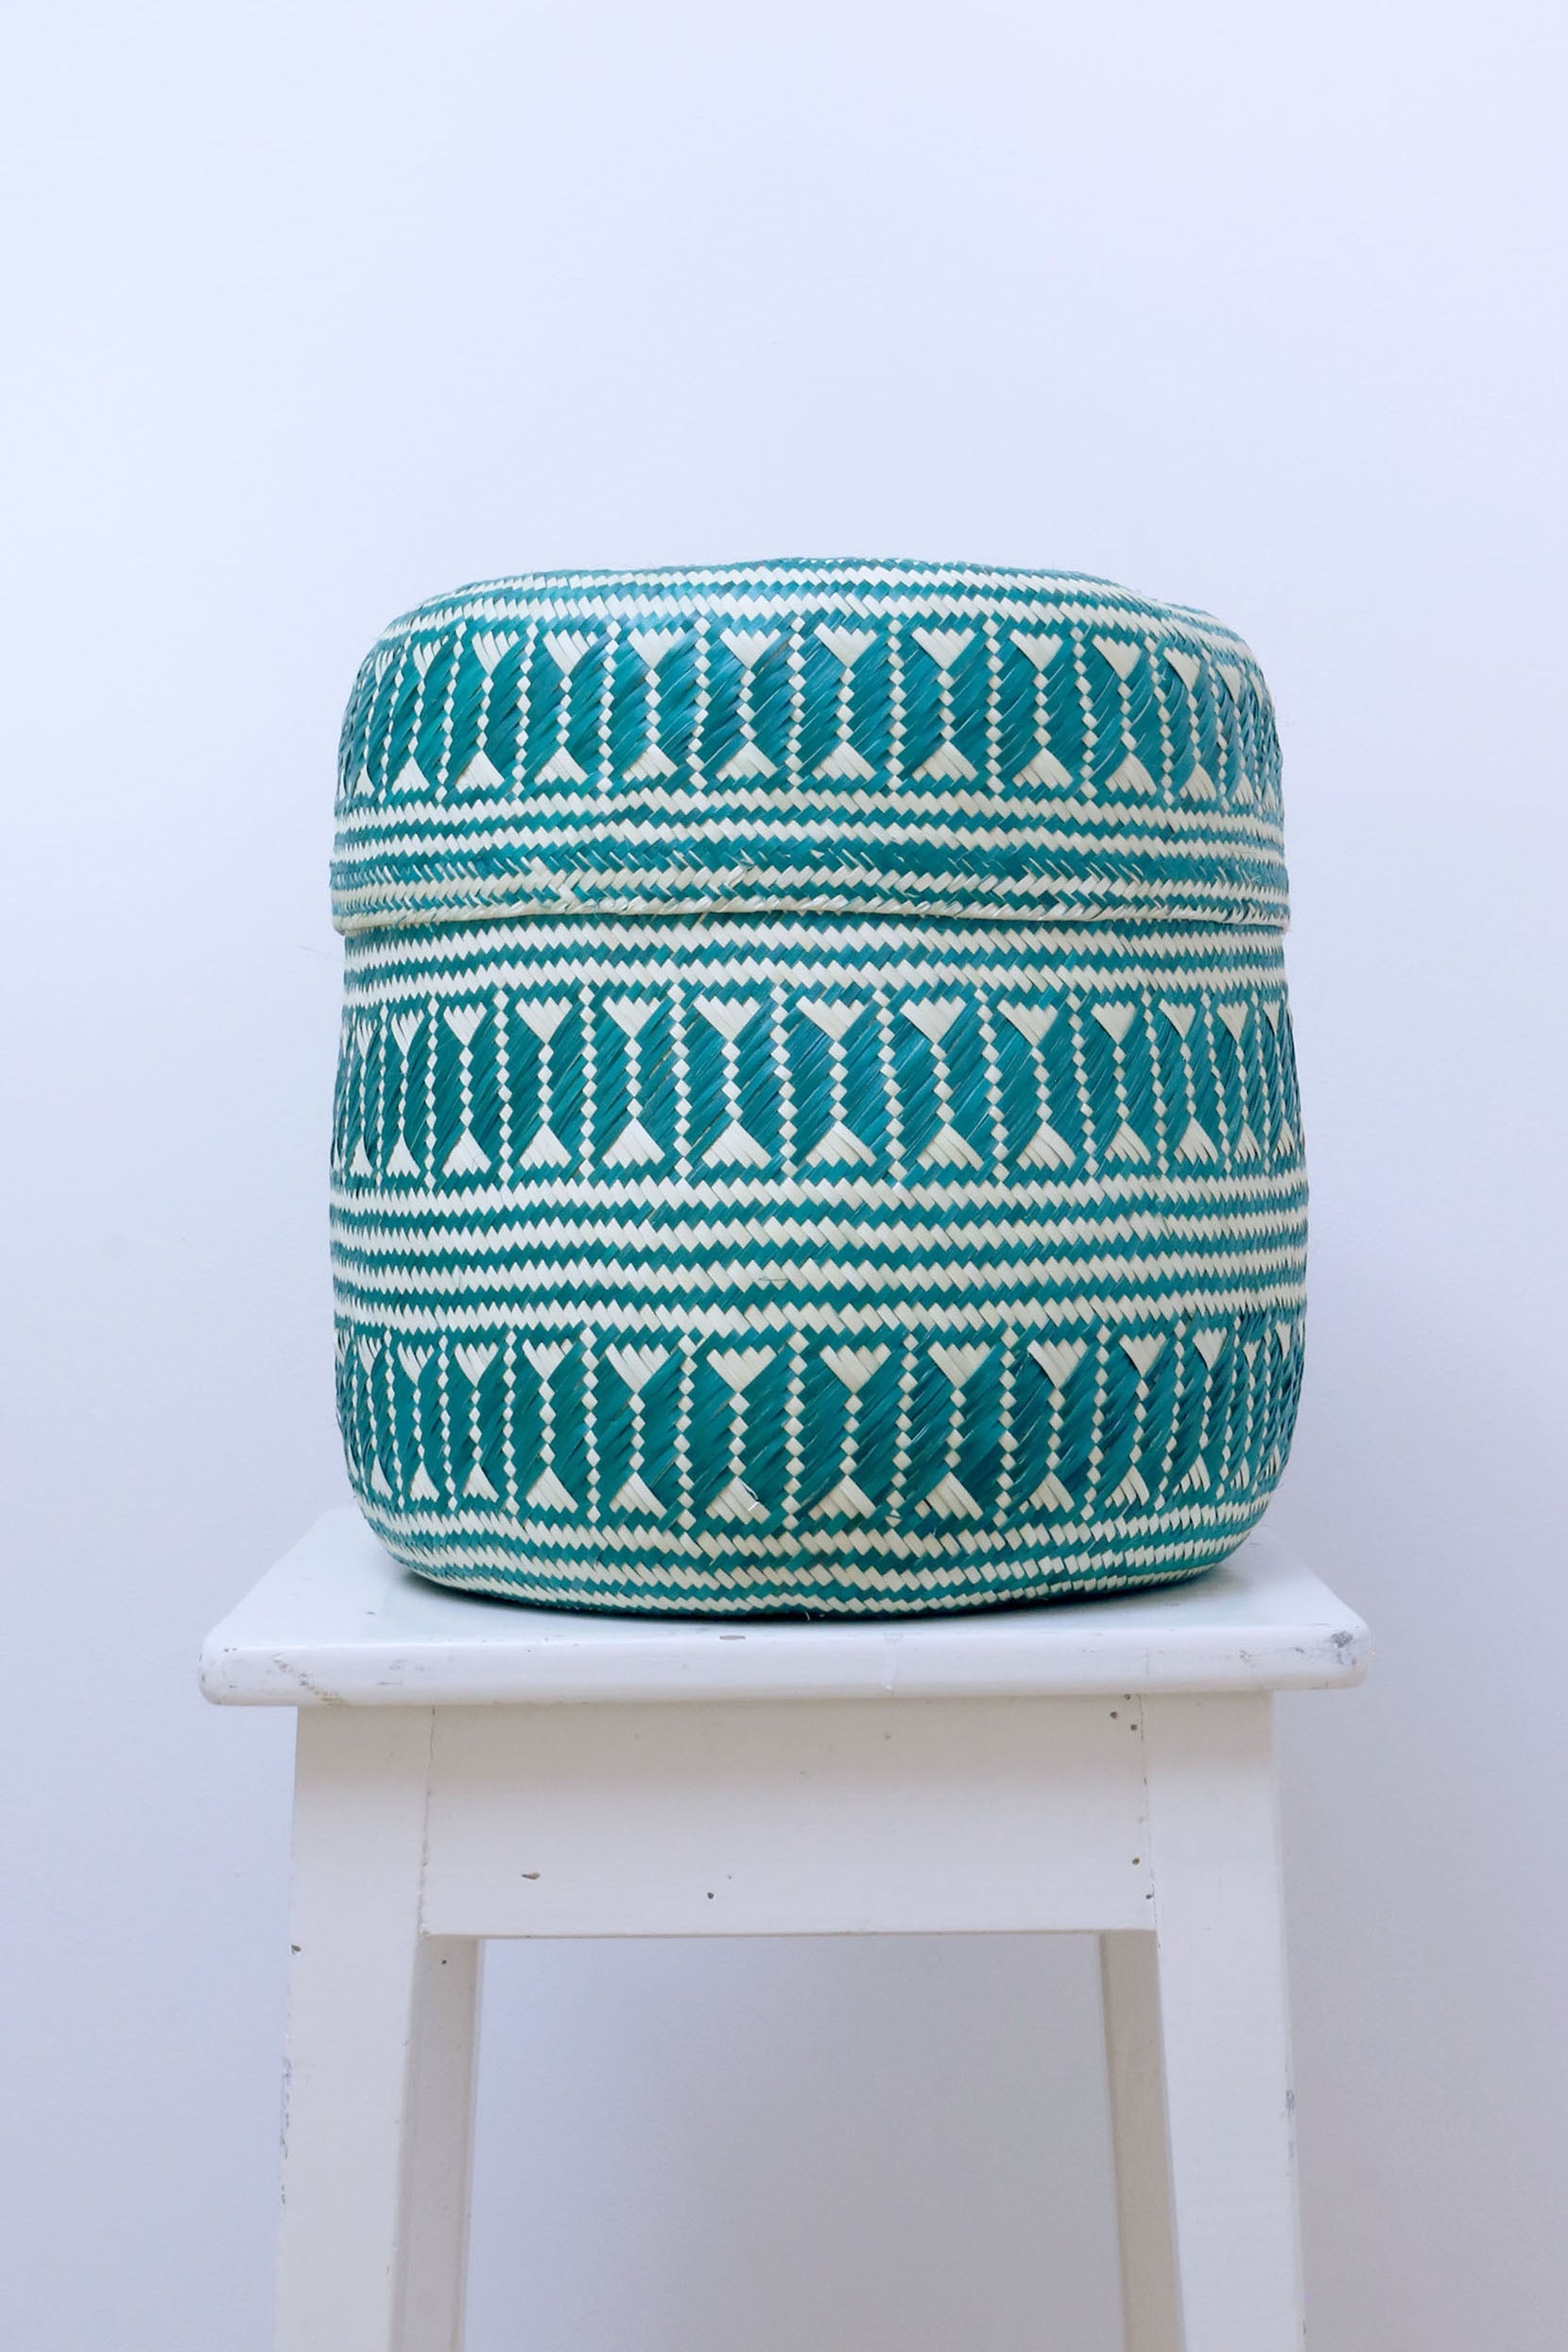 handwoven palm baskets, set of 5 blue-green